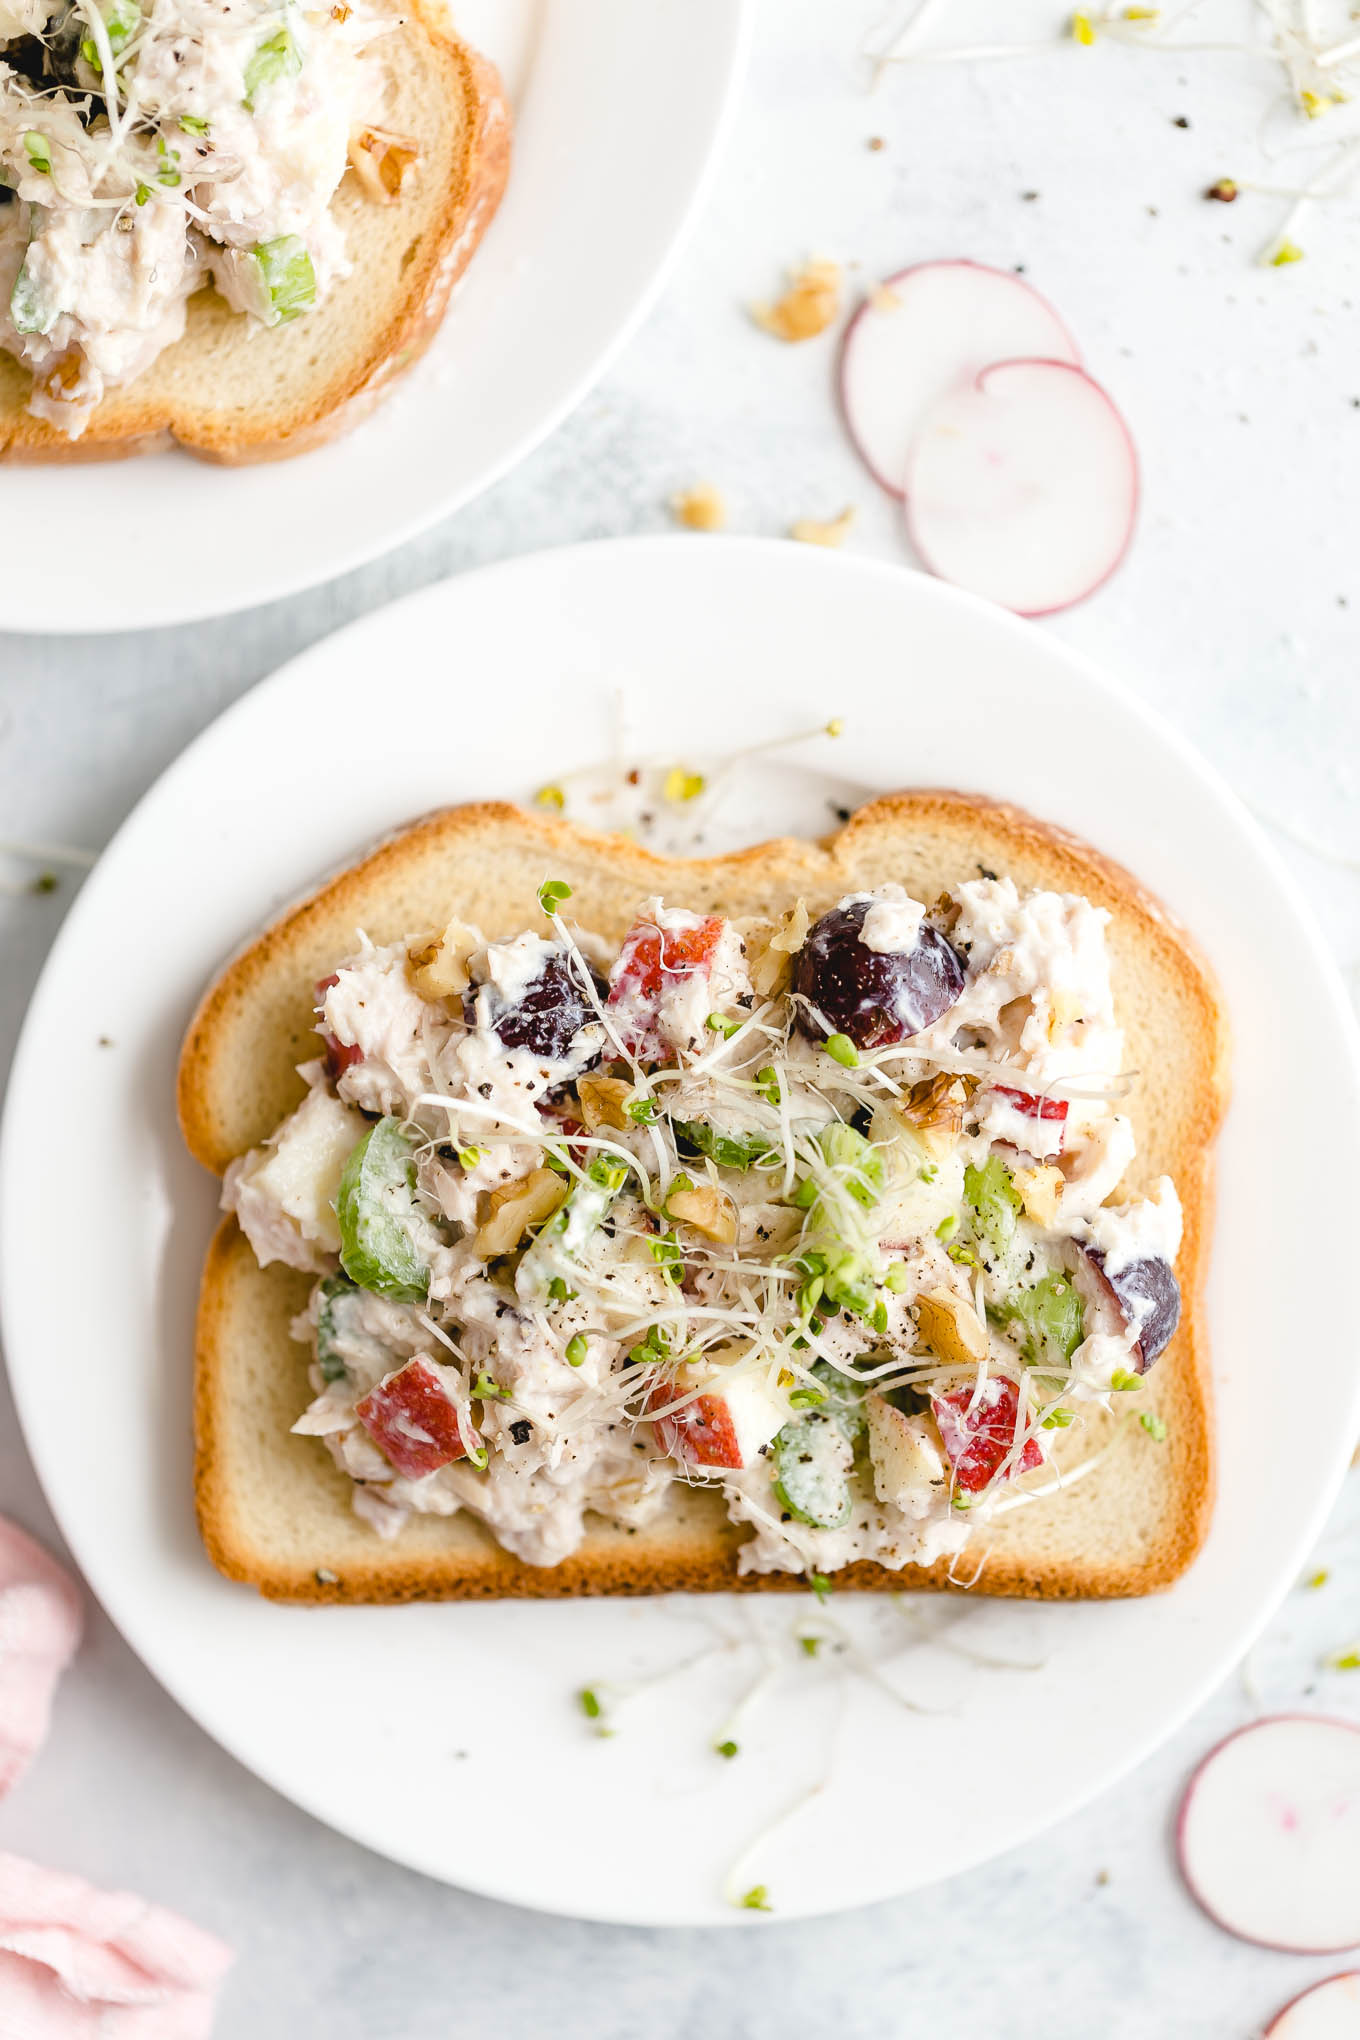 healthy tuna salad recipe with nonfat greek yogurt, apple, celery, grapes, and walnuts